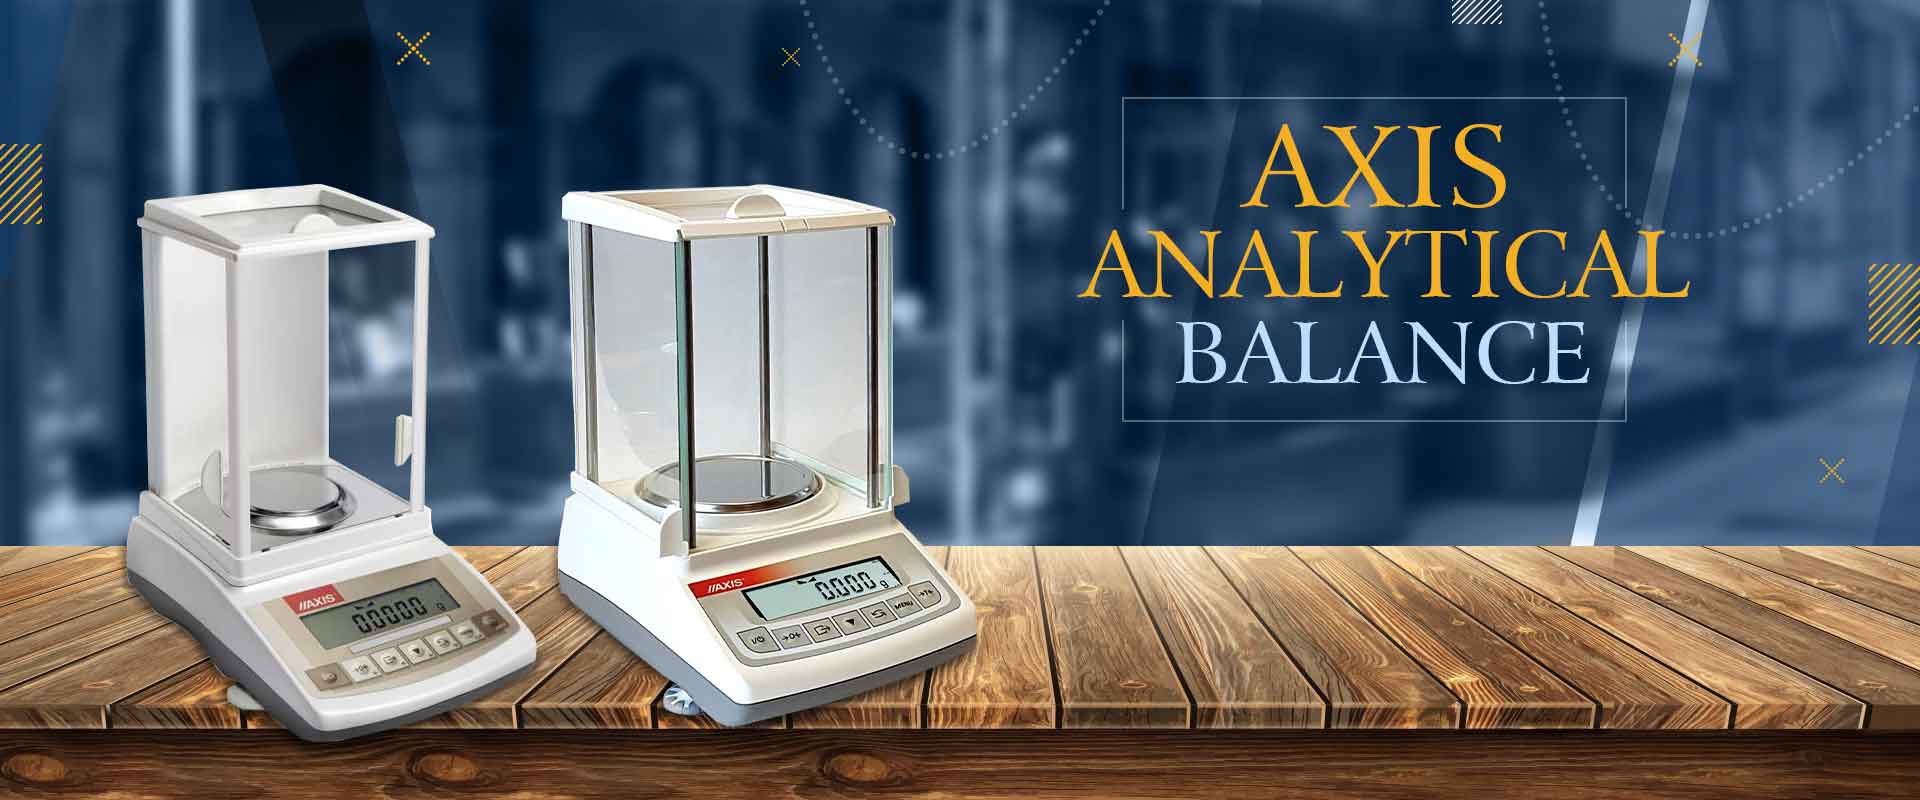 Axis Analytical Balance